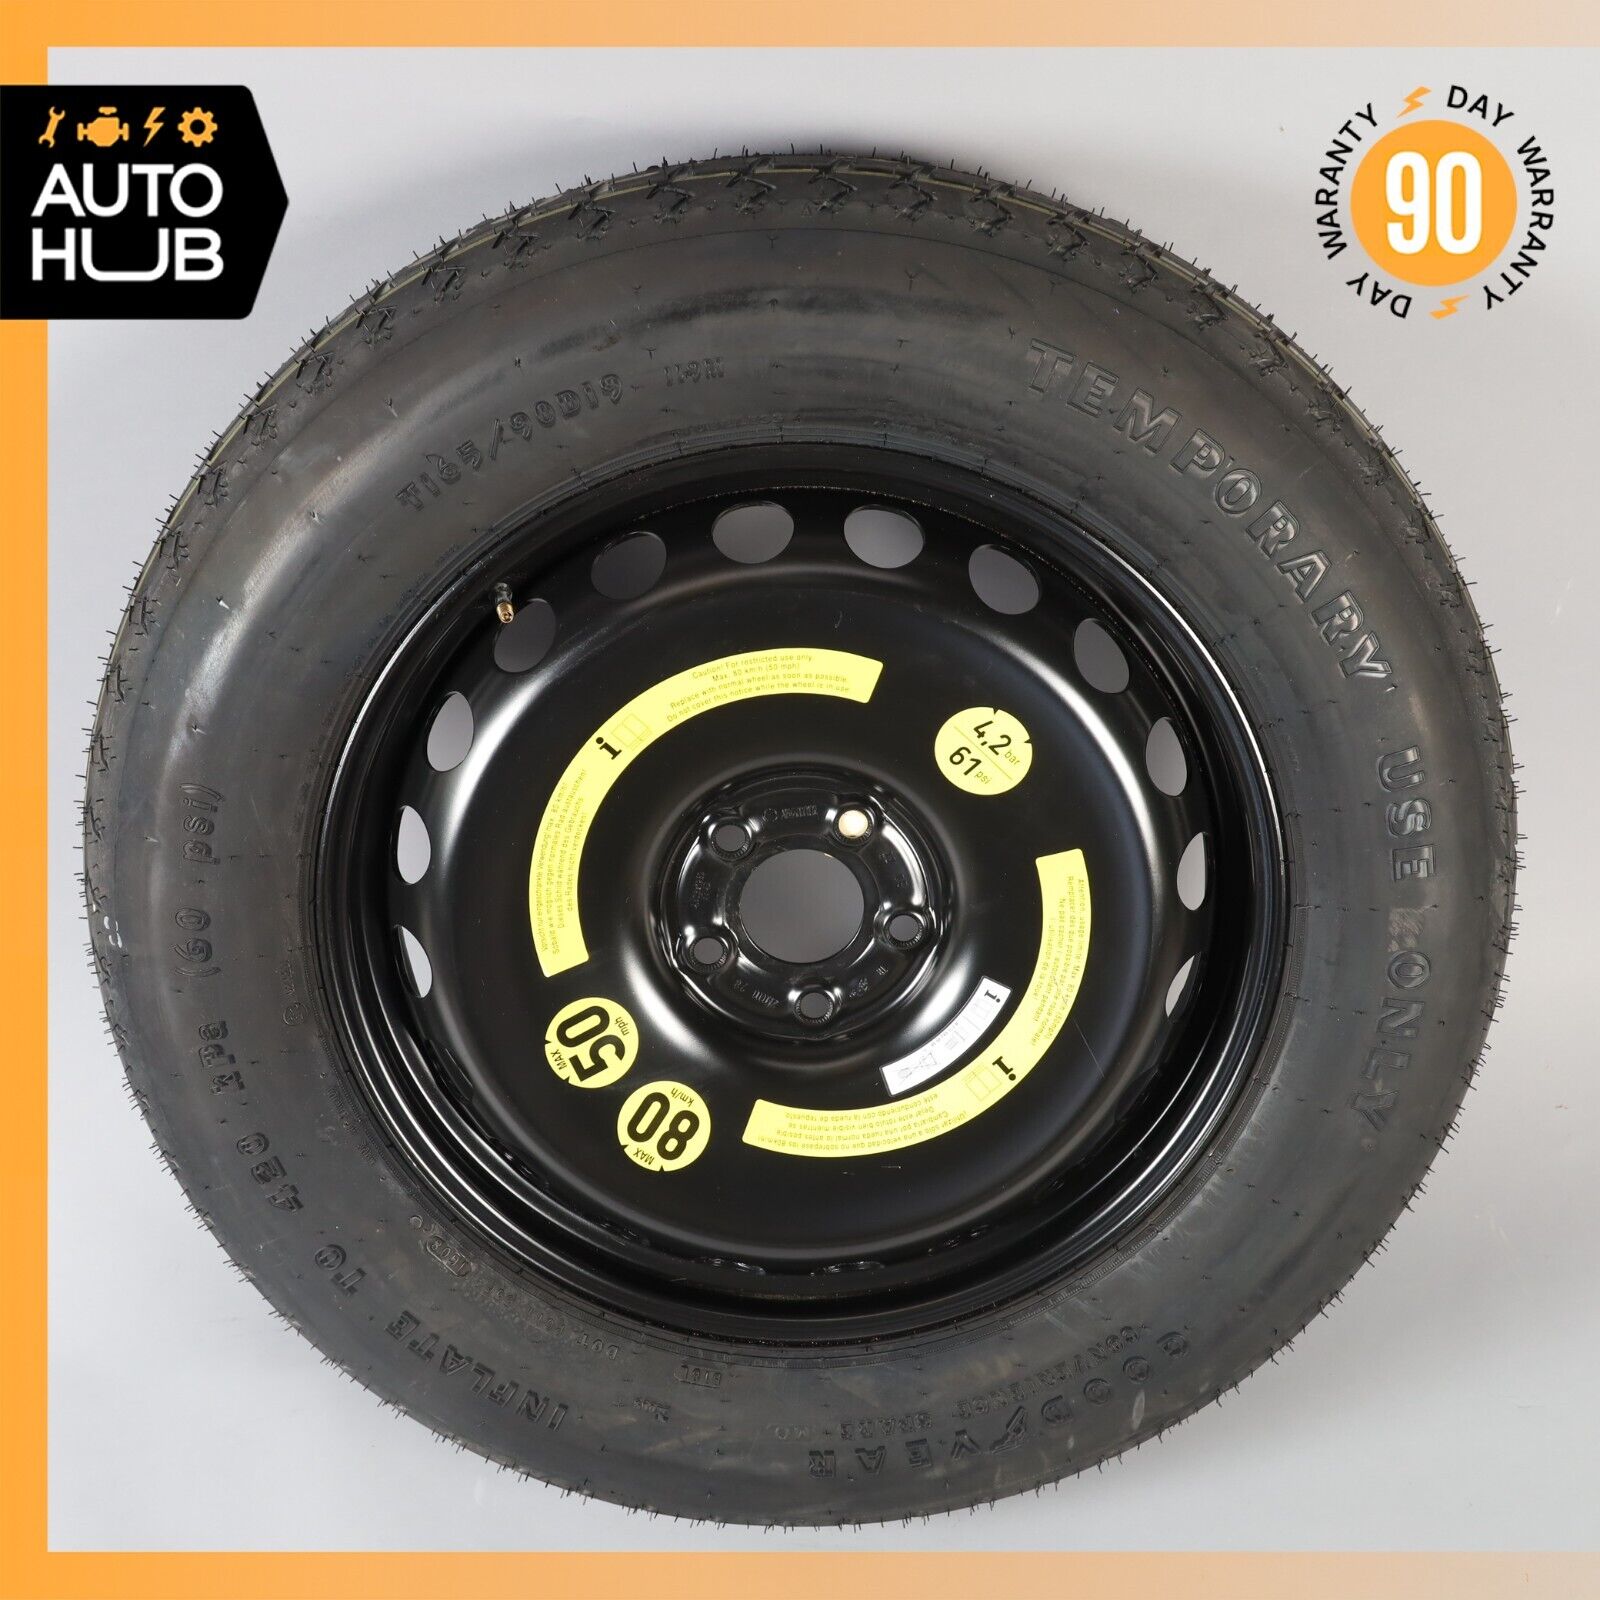 06-11 Mercedes W164 ML350 Emergency Spare Tire Wheel Donut Rim 155 90 18